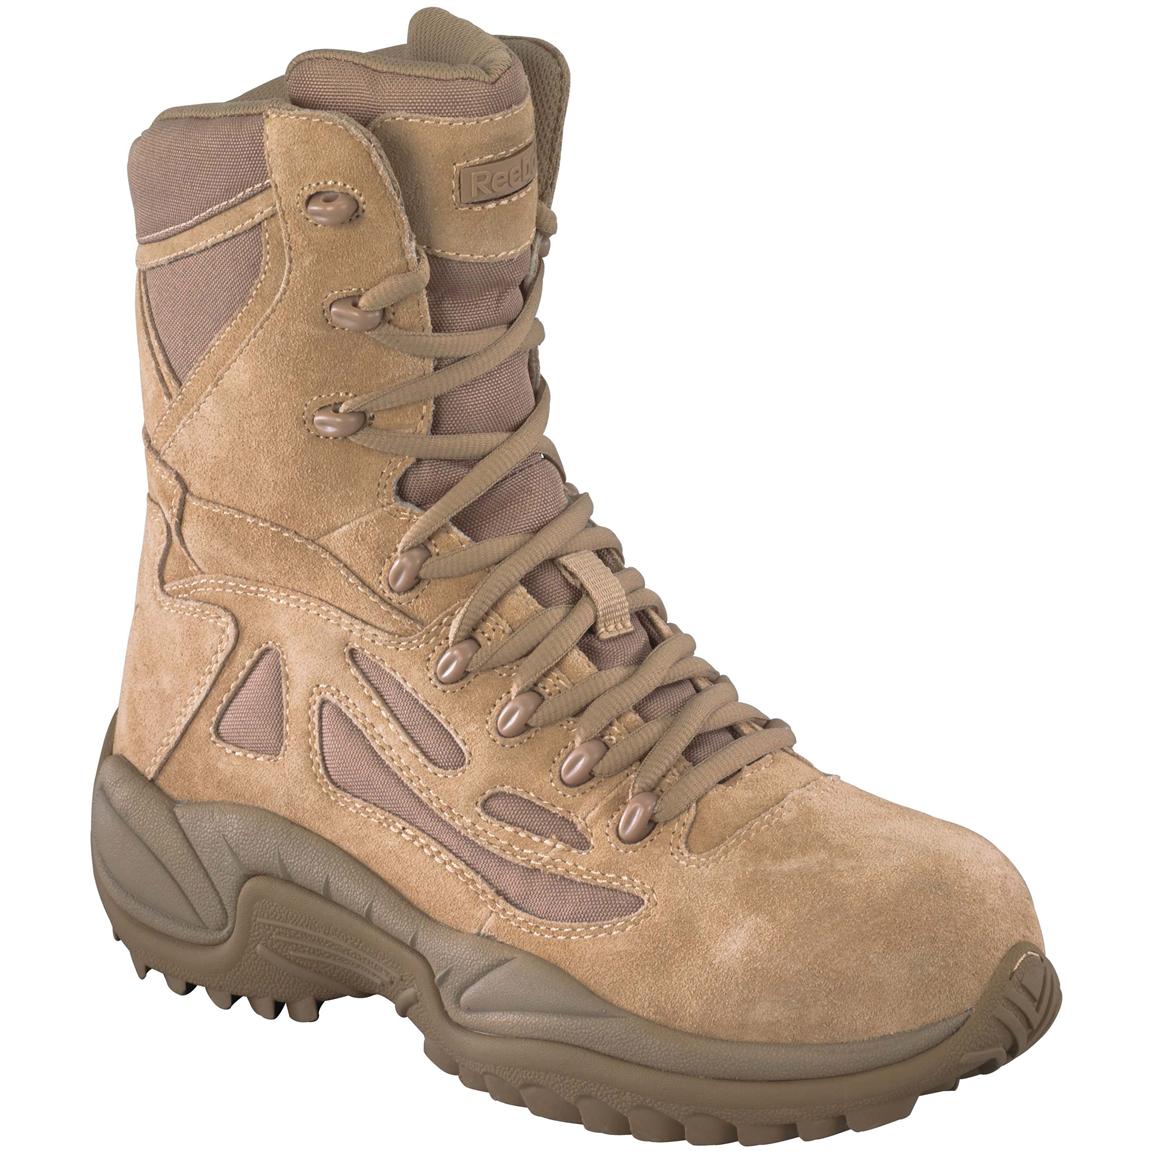 Women's Reebok® Composite Toe Hiking Boots 591902